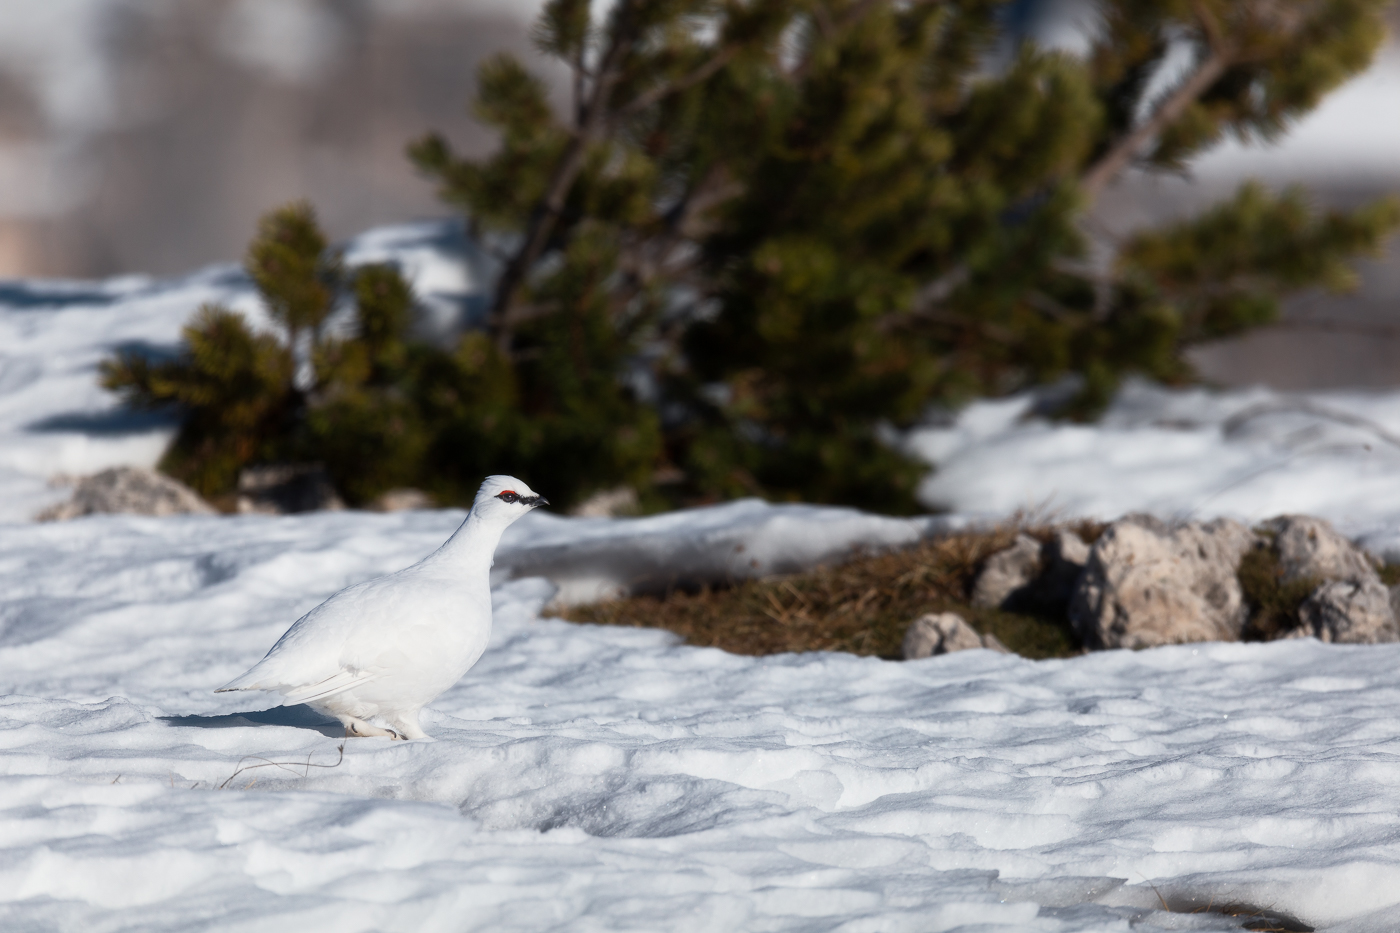 Pernice bianca (Lagopus muta) ormai scoperta si allontana lentamente. Parco Naturale Tre Cime, Dolomiti di Sesto, Italia.